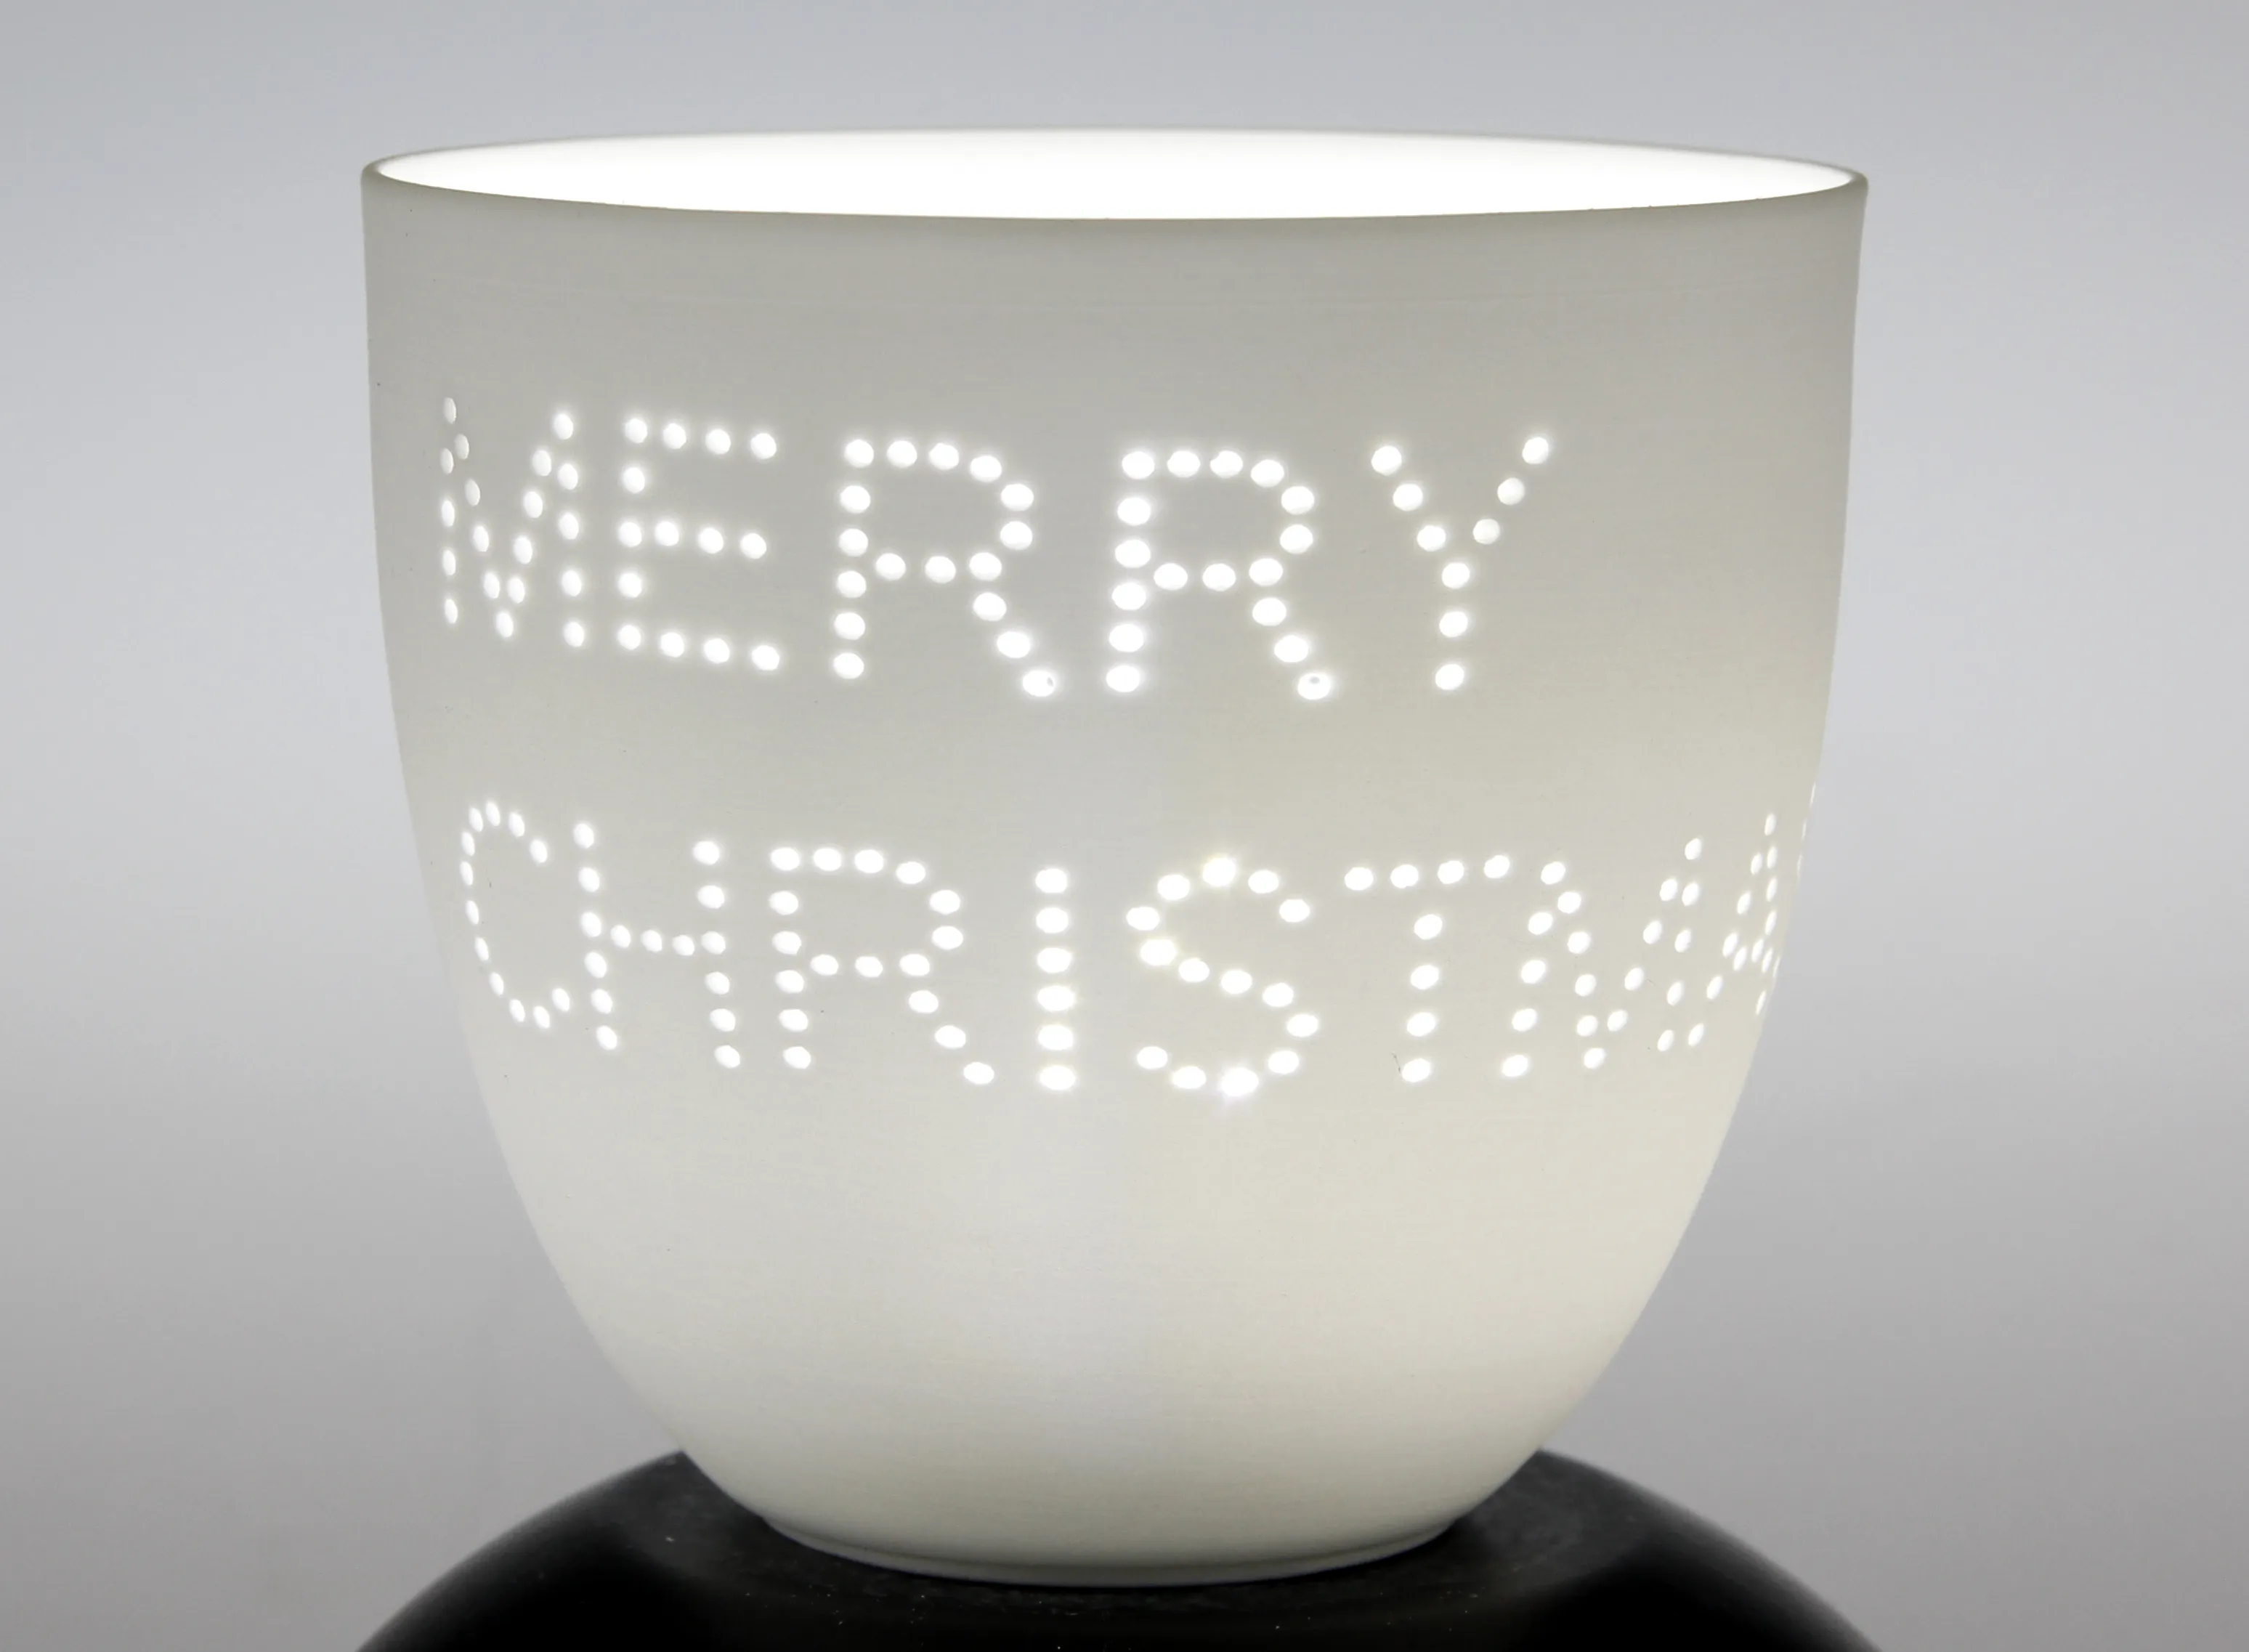 Porzellan-Kerzenbecher "Merry Christmas", weiß - ideal für Teelichter